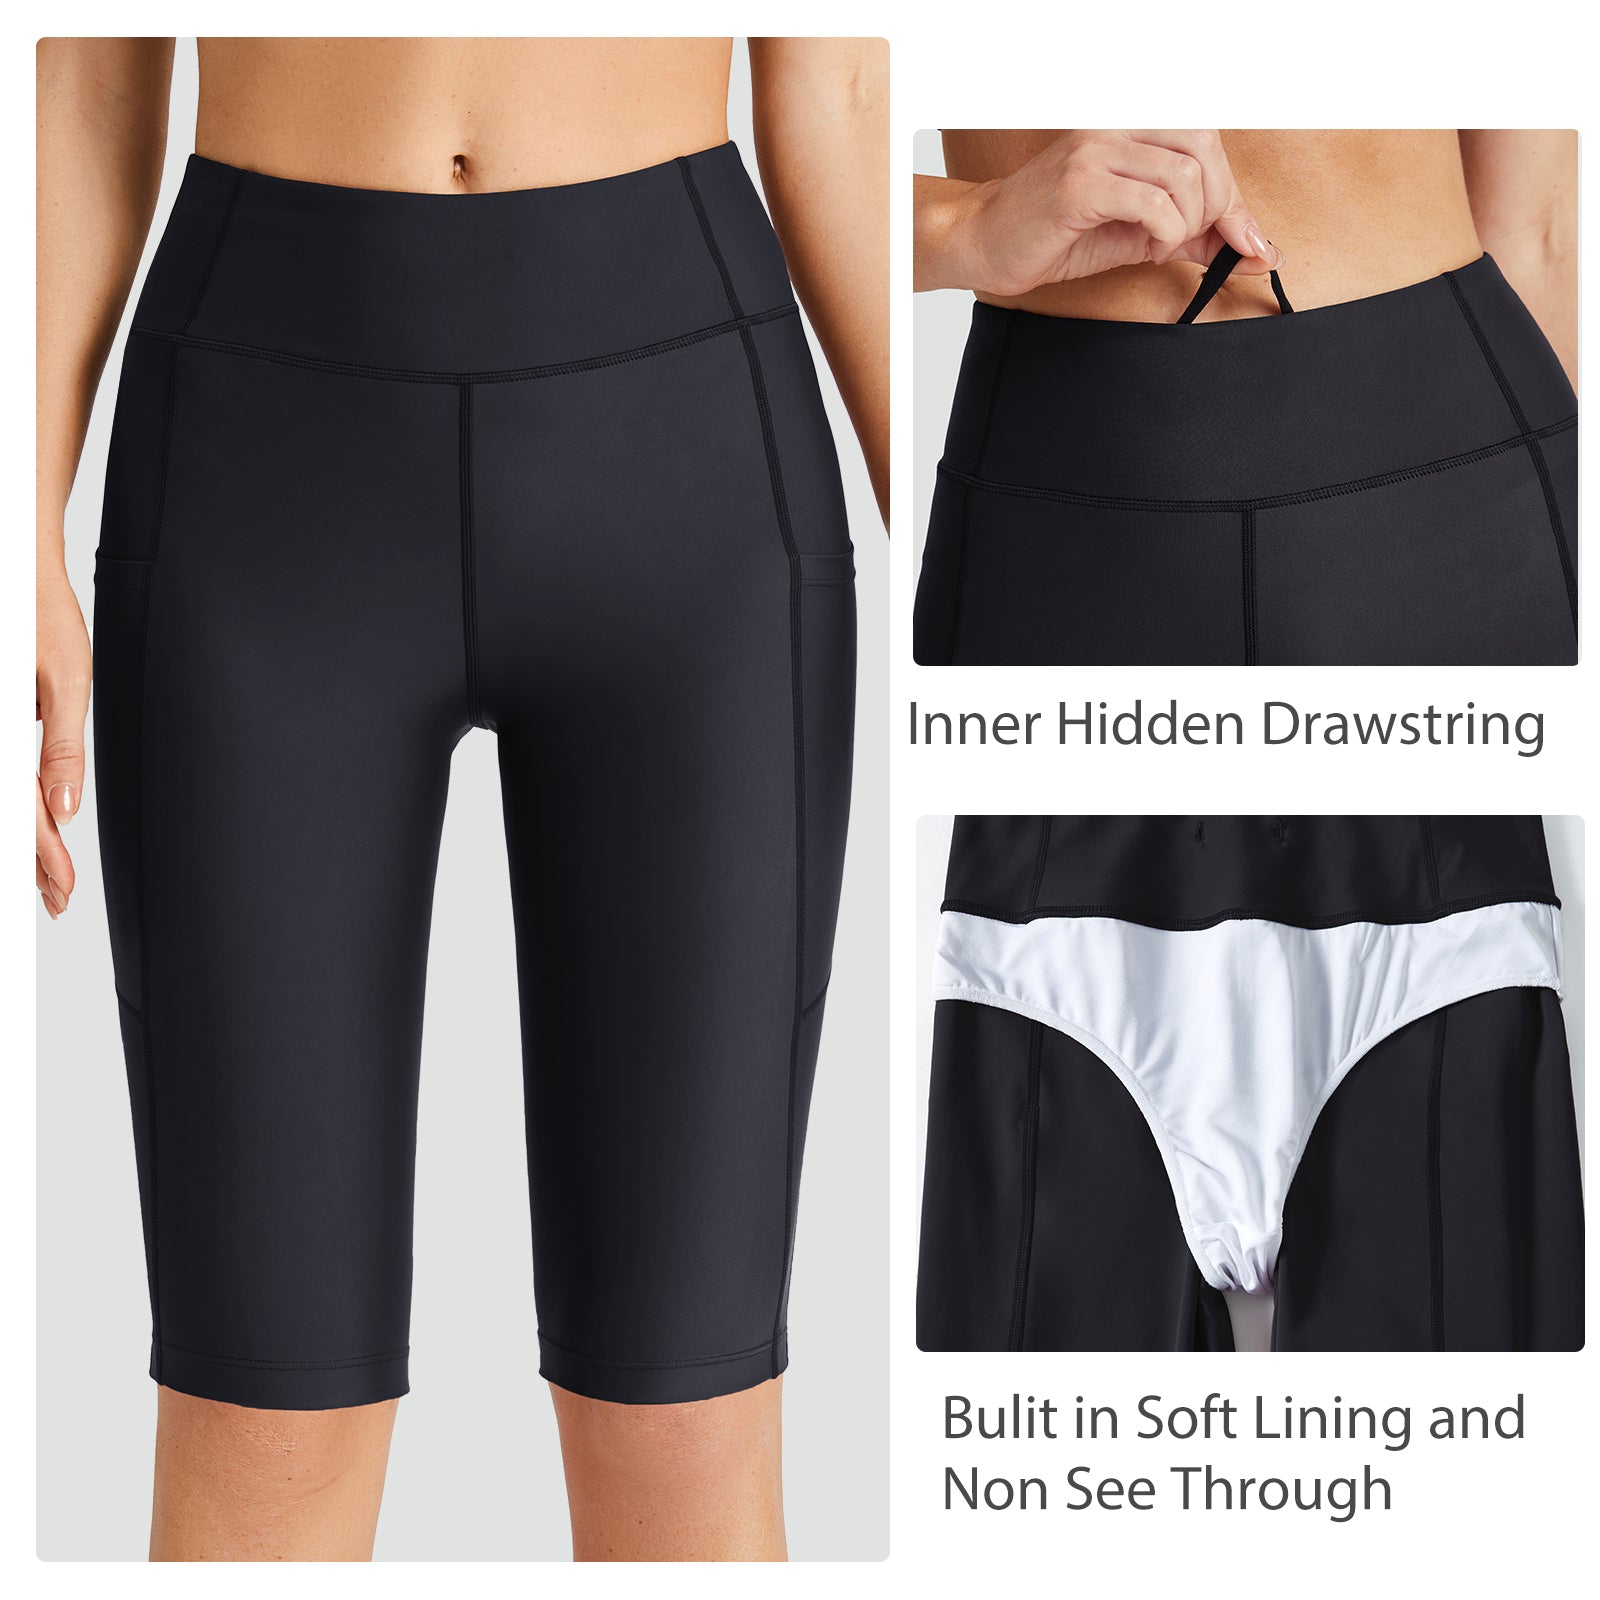 BALEAF Women's Long Swim Shorts Spf UV High Waisted Tummy Control Board Shorts with Pockets Black S - image 4 of 6